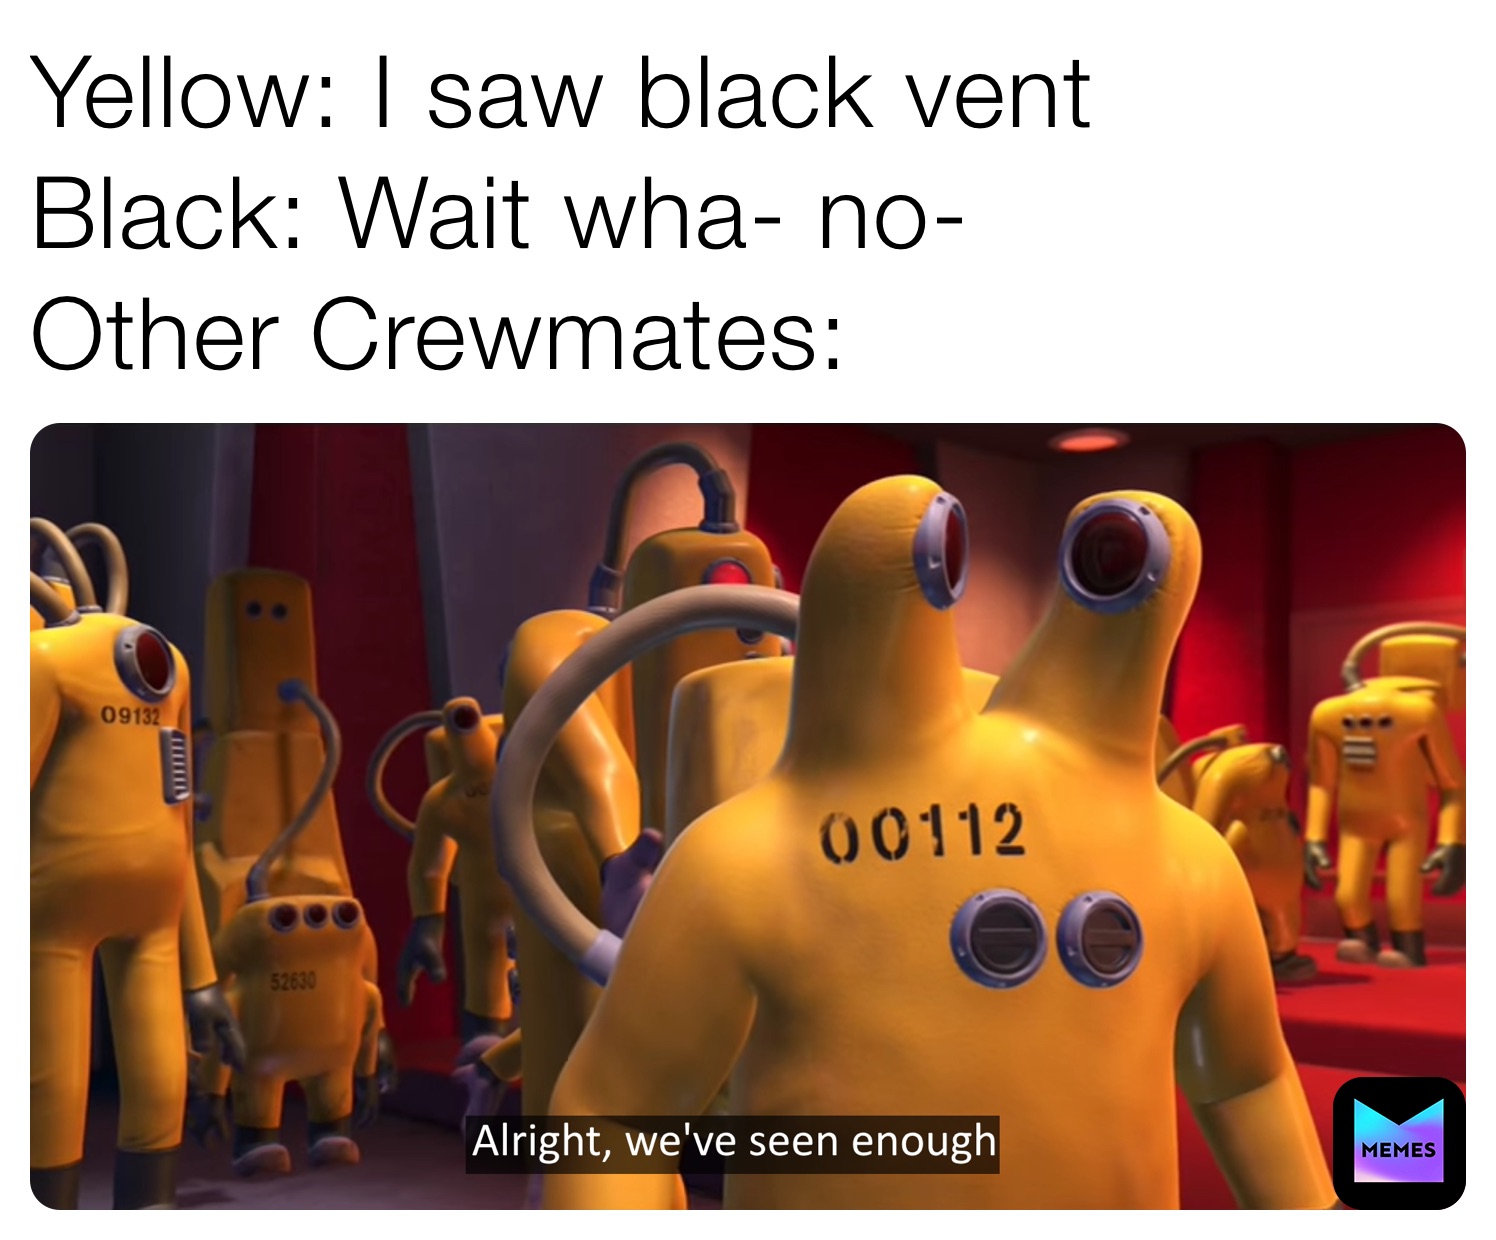 Yellow: I saw black vent
Black: Wait wha- no-
Other Crewmates: